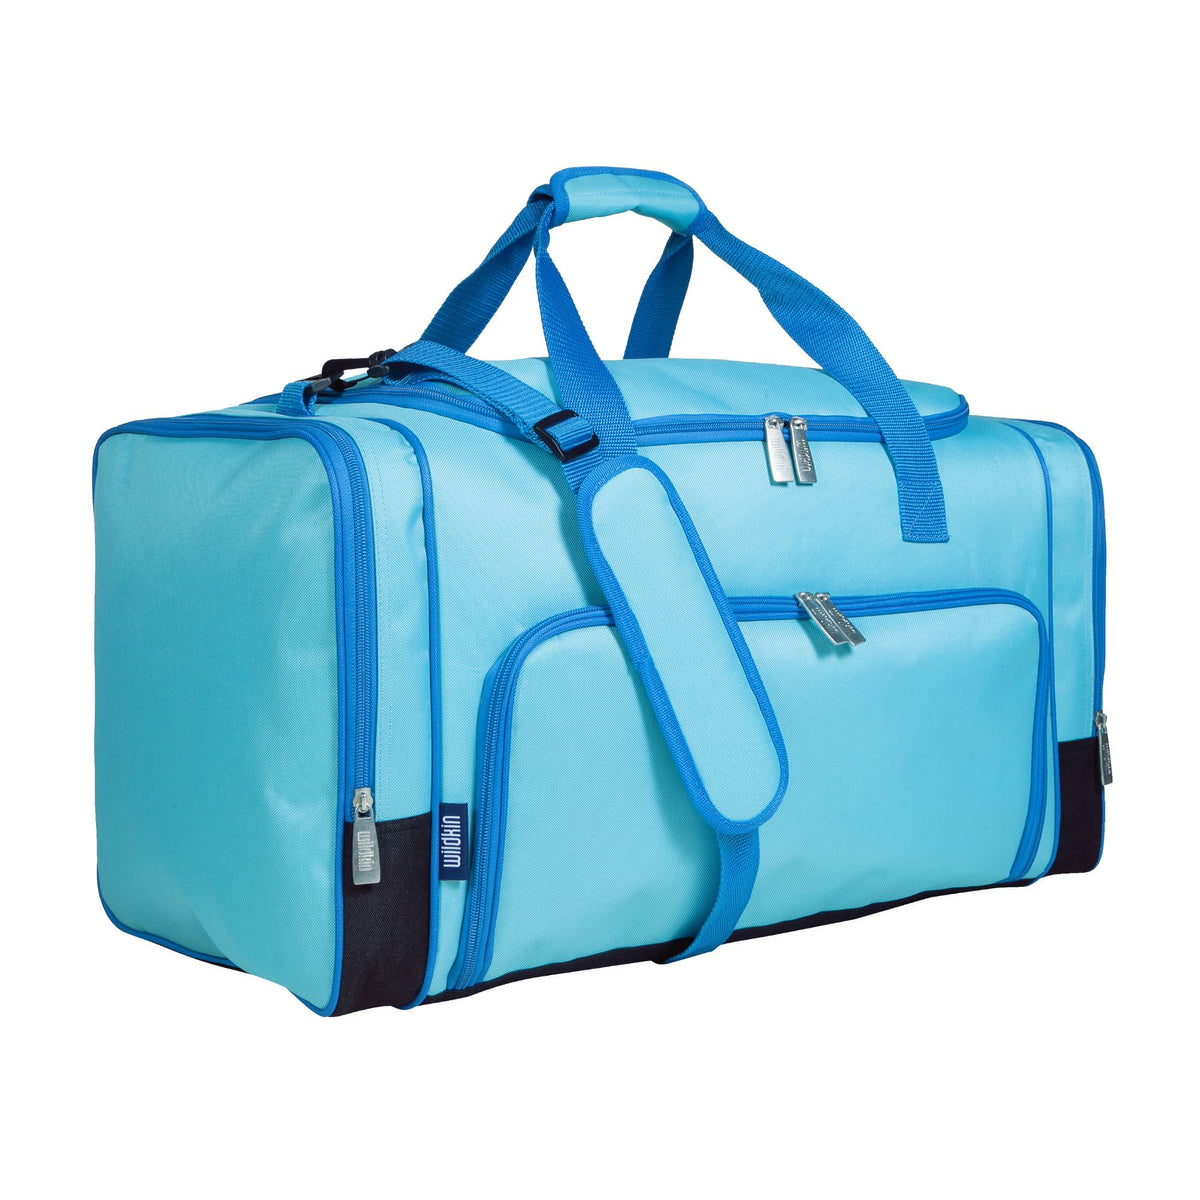 Wildkin Blue Camo Overnighter Duffel Bag